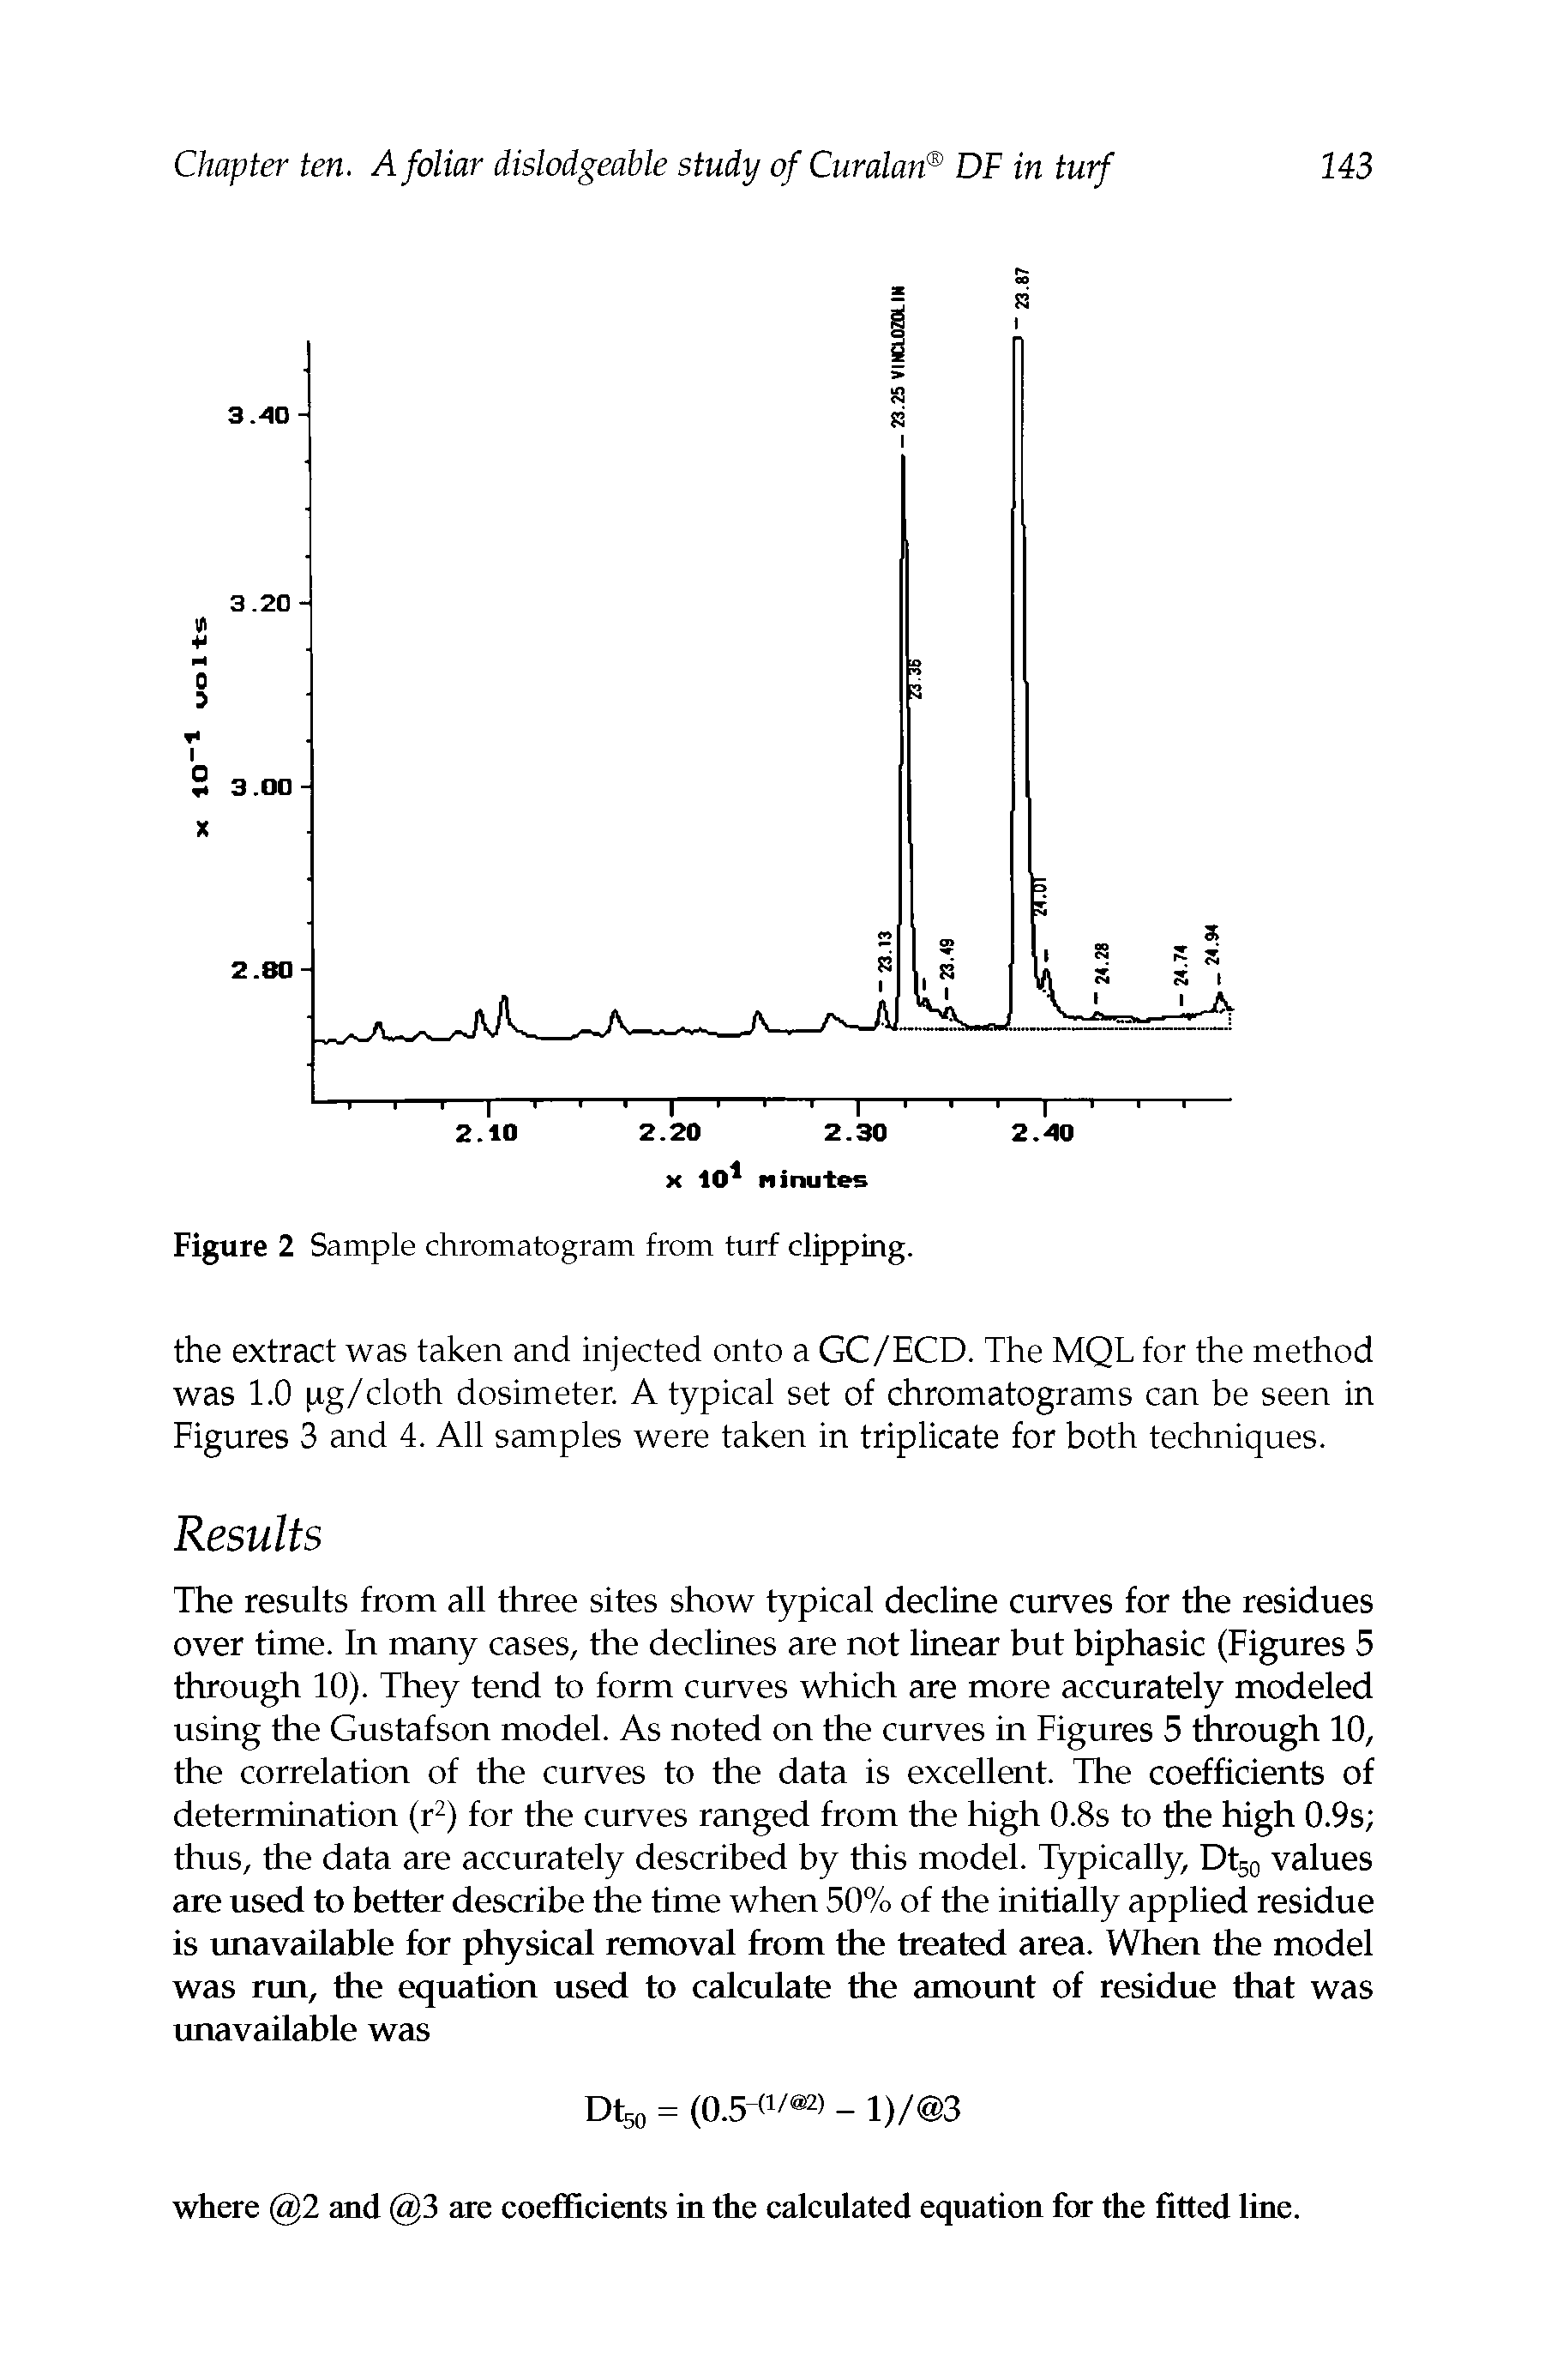 Figure 2 Sample chromatogram from turf clipping.